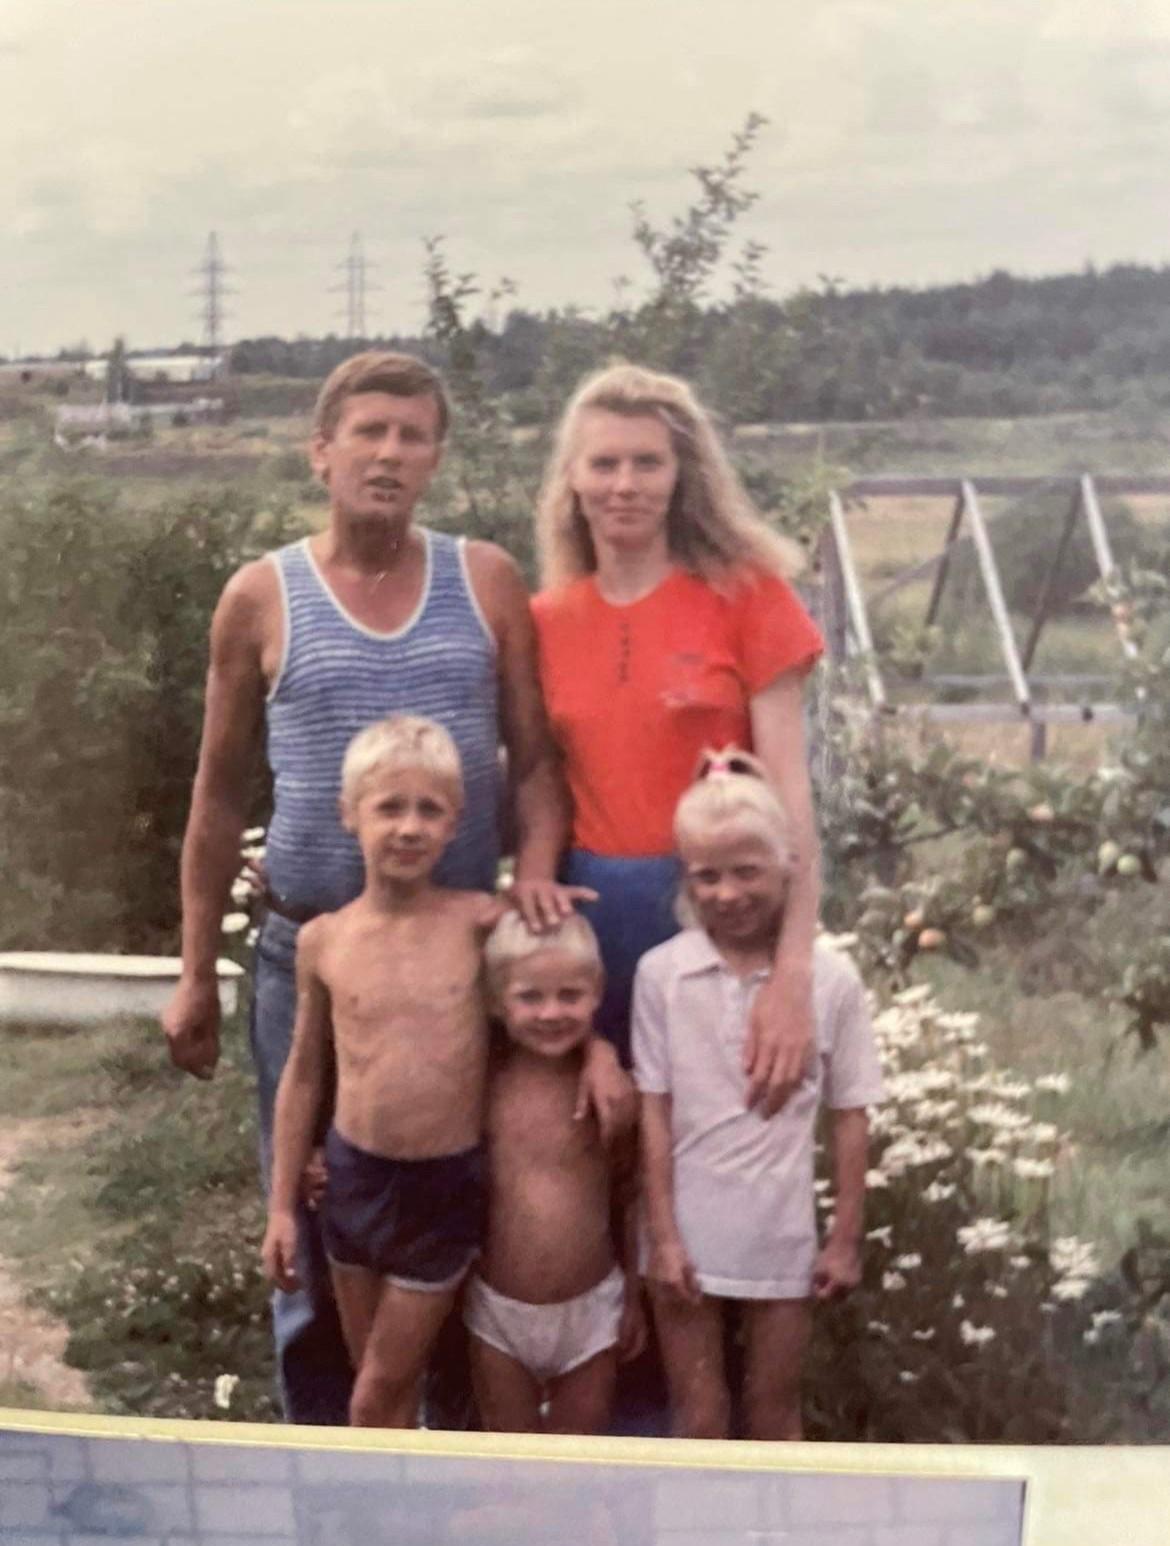 old photo of Ukrainian Family of 5